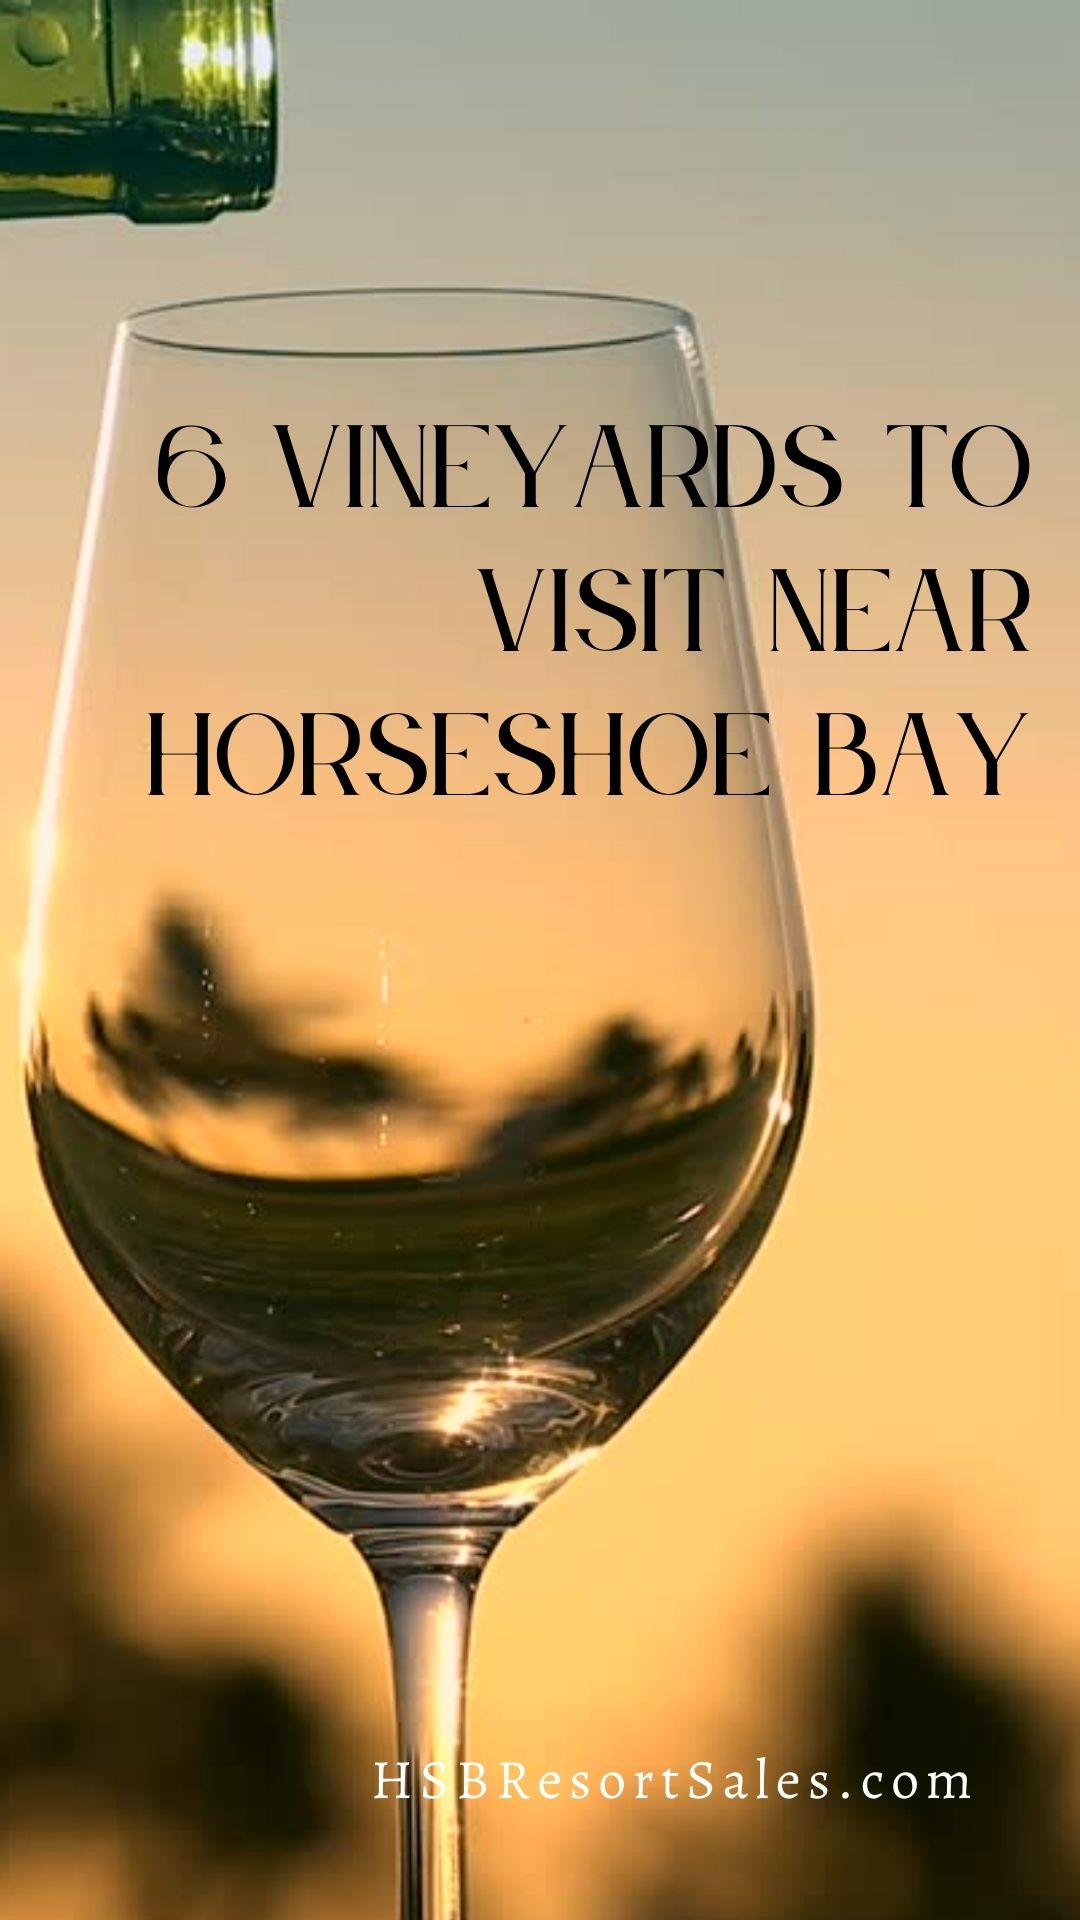 6 Vineyards to Visit Near Horseshoe Bay